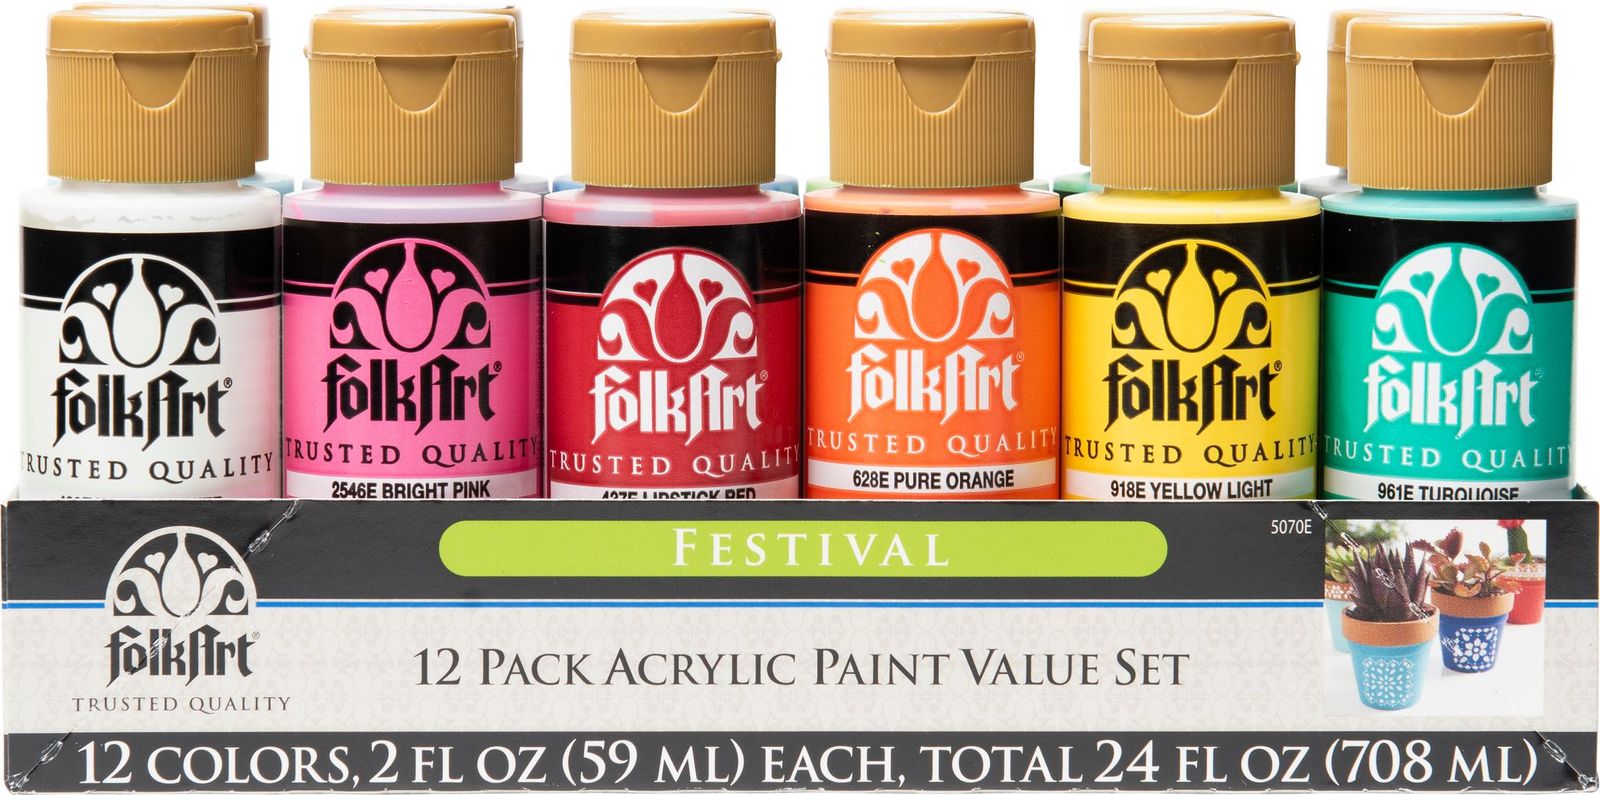 FolkArt Matte Acrylic Paint - Lipstick Red, 2 oz, Bottle